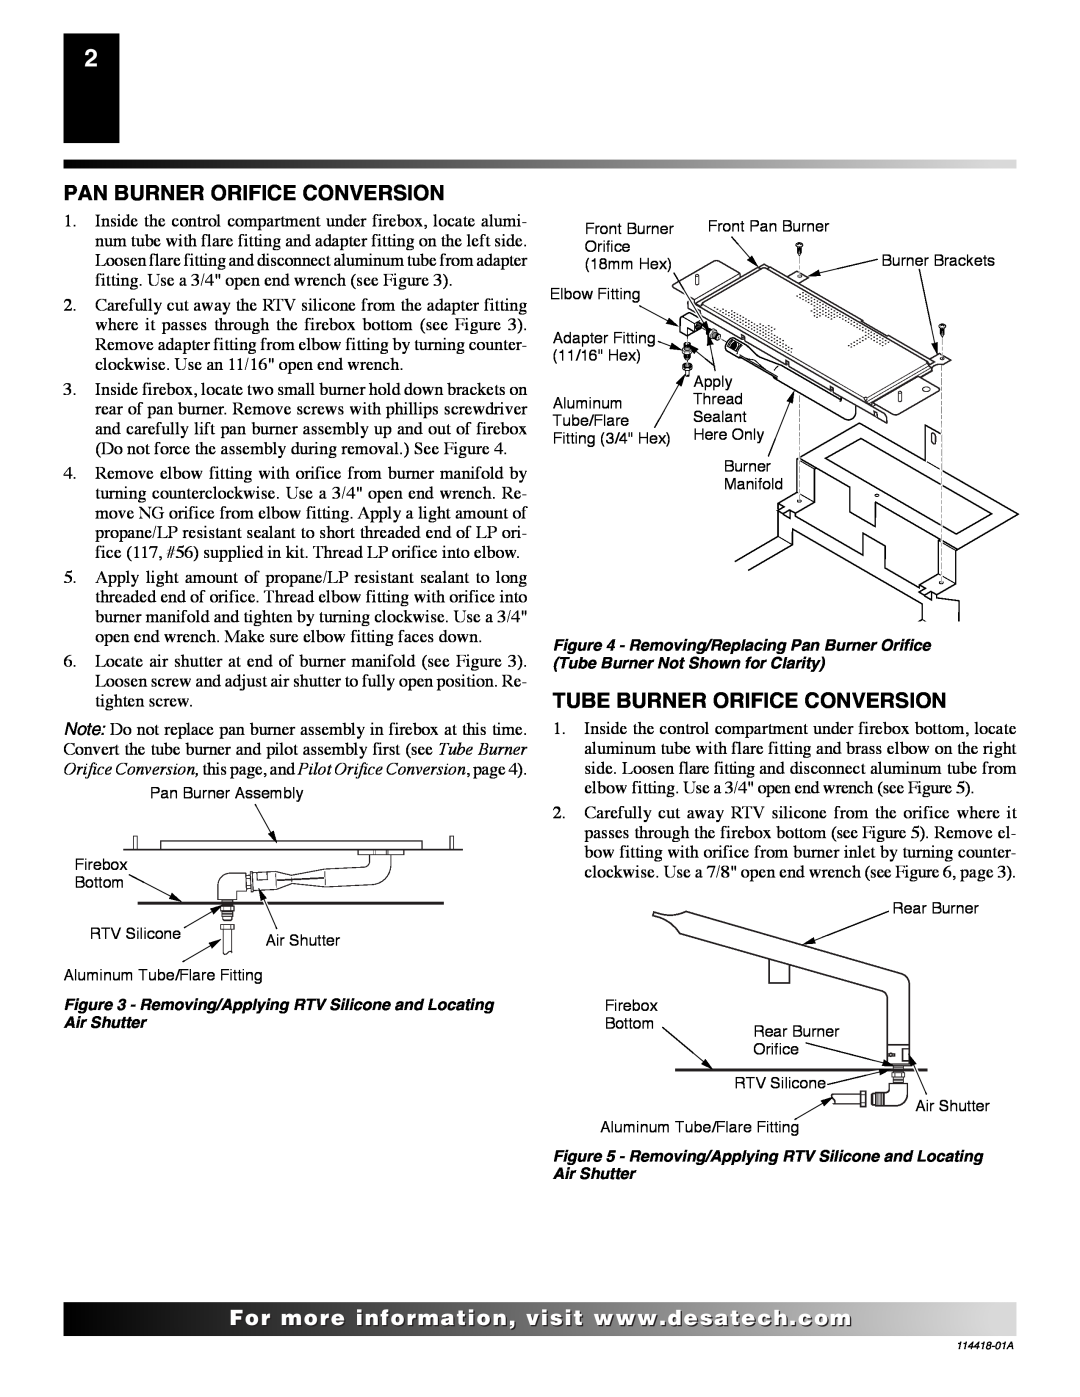 Desa PCDM-36VB installation instructions Pan Burner Orifice Conversion, Tube Burner Orifice Conversion 